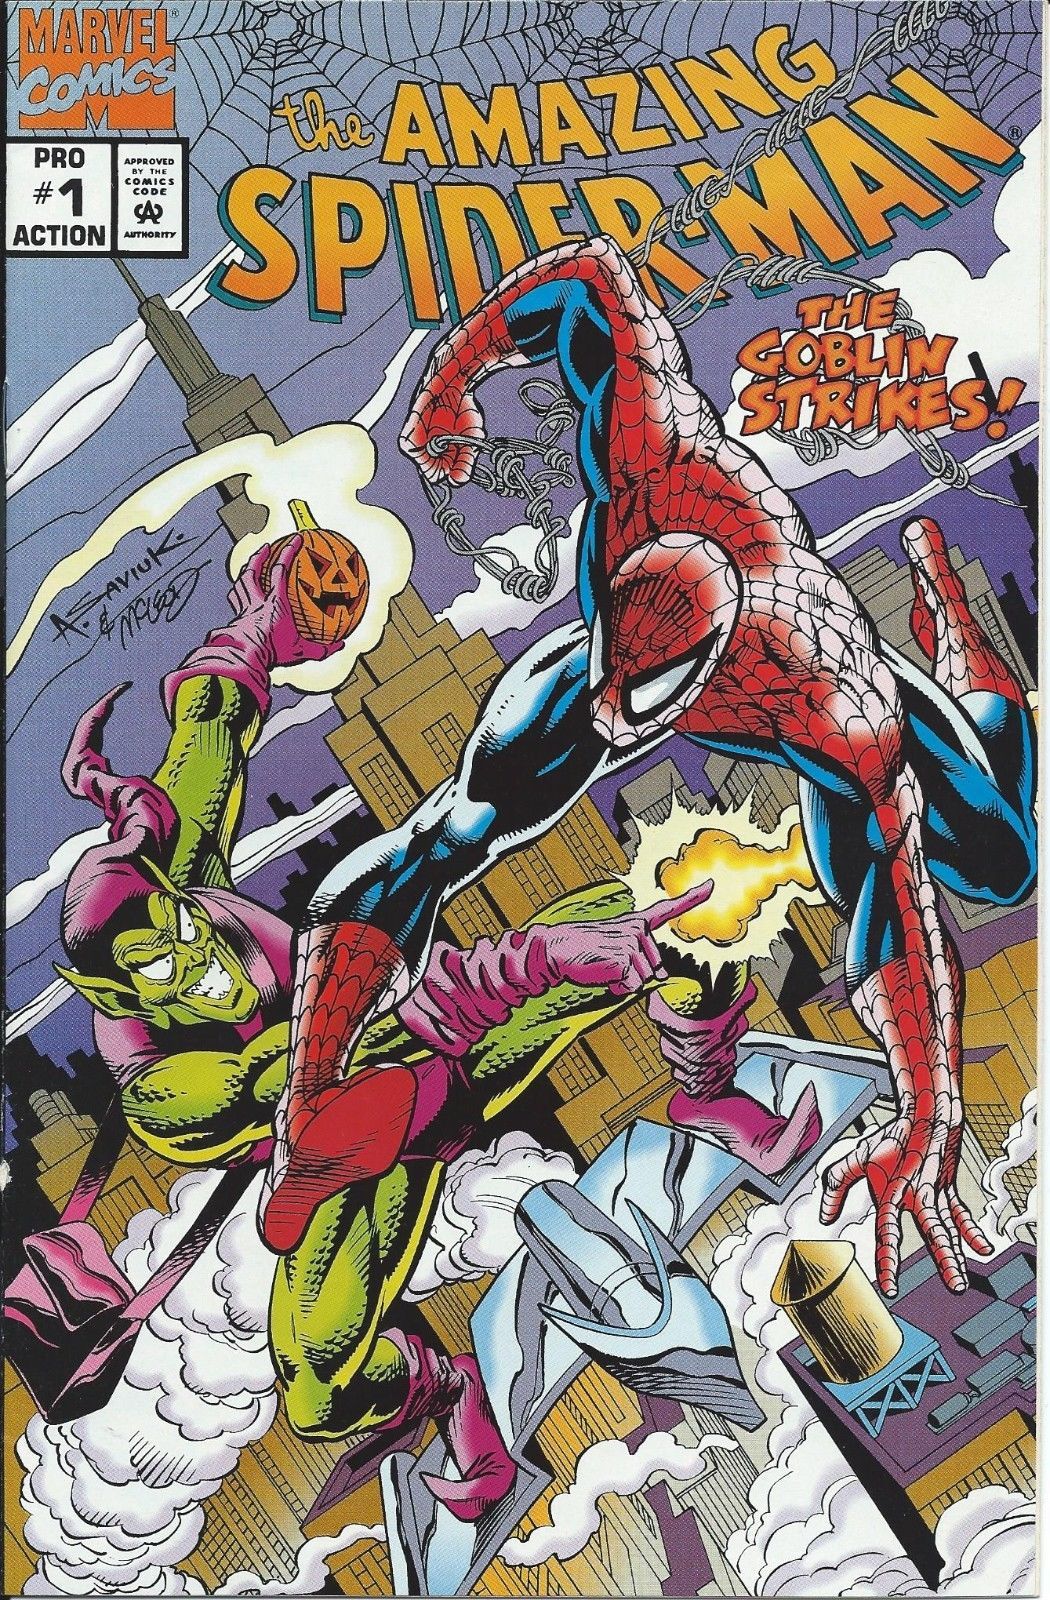 Amazing Spider-Man: The Goblin Strikes Comic